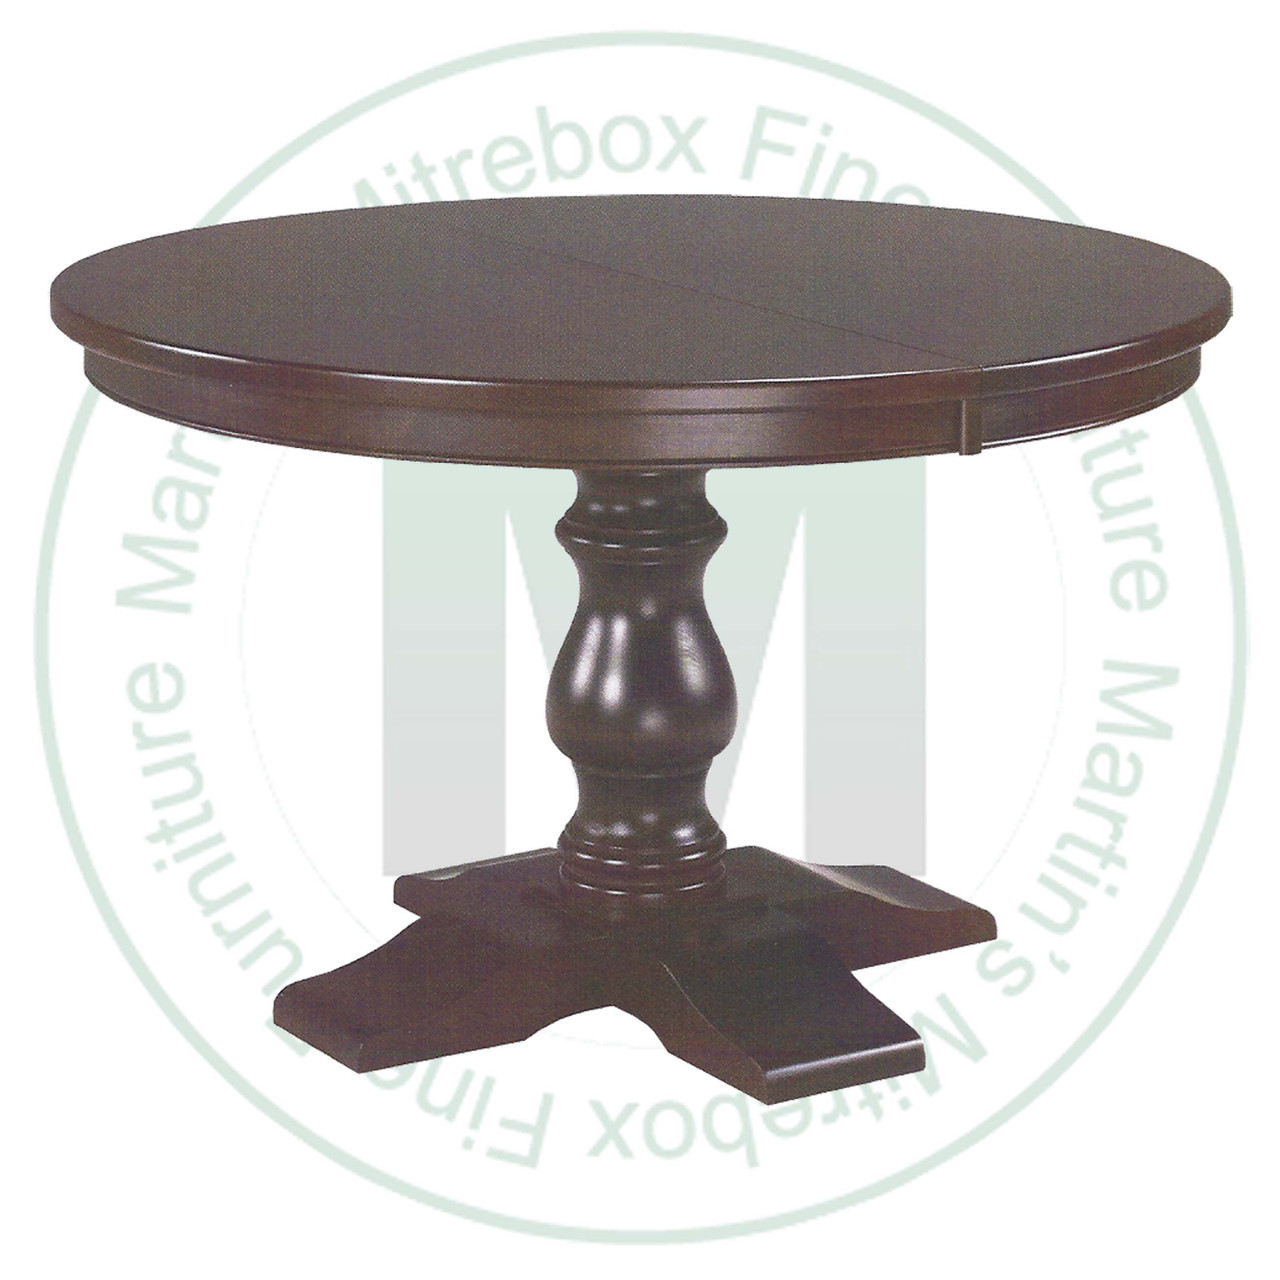 Oak Savannah Single Pedestal Table 60''D x 60''W x 30''H With 1 - 12'' Leaf Table